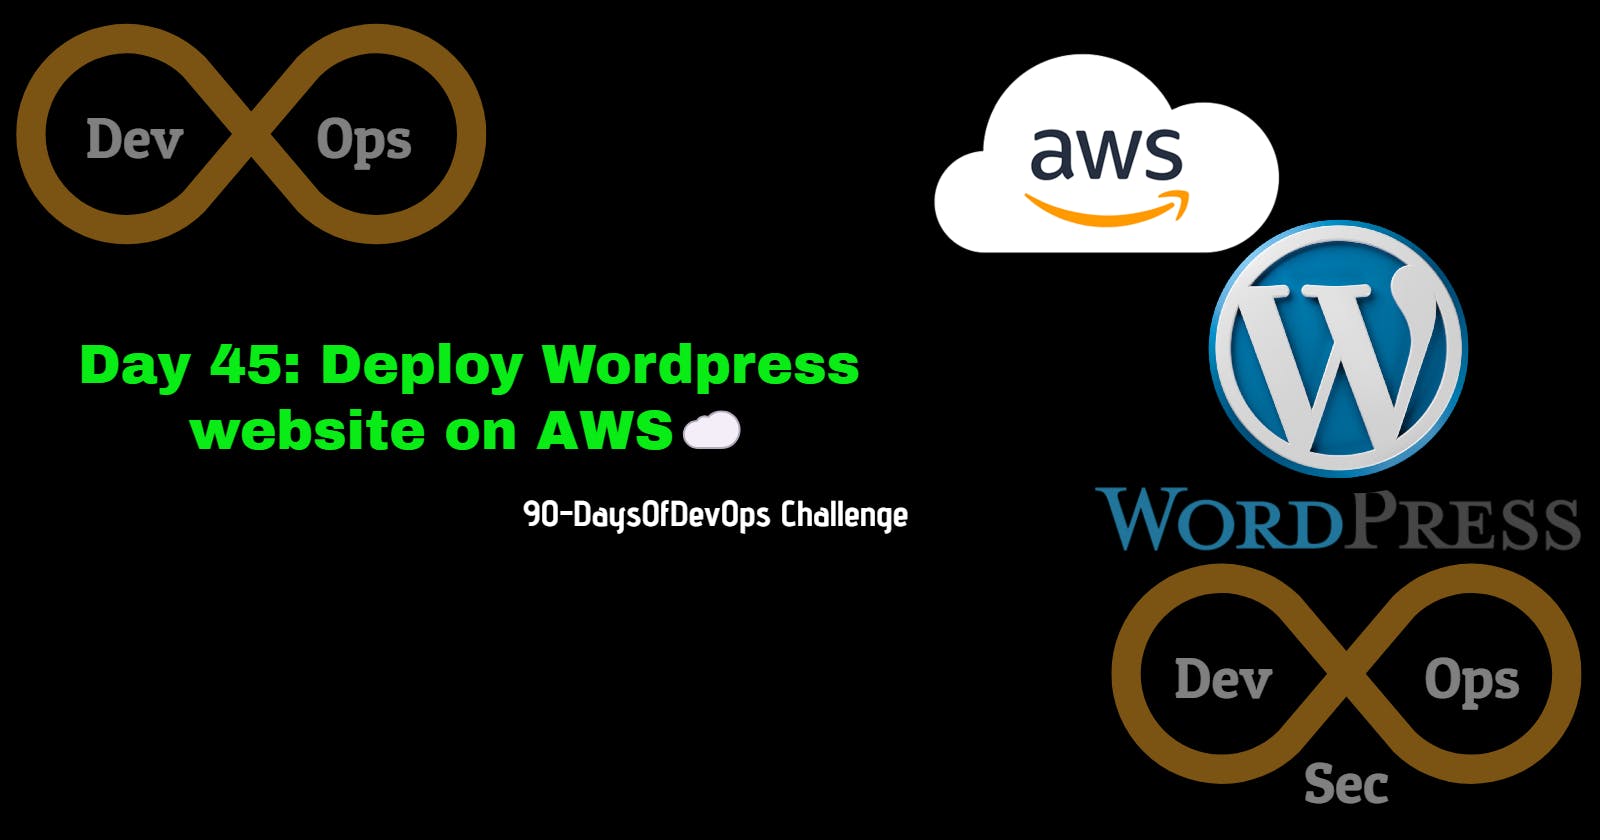 Day 45: Deploy Wordpress website on AWS